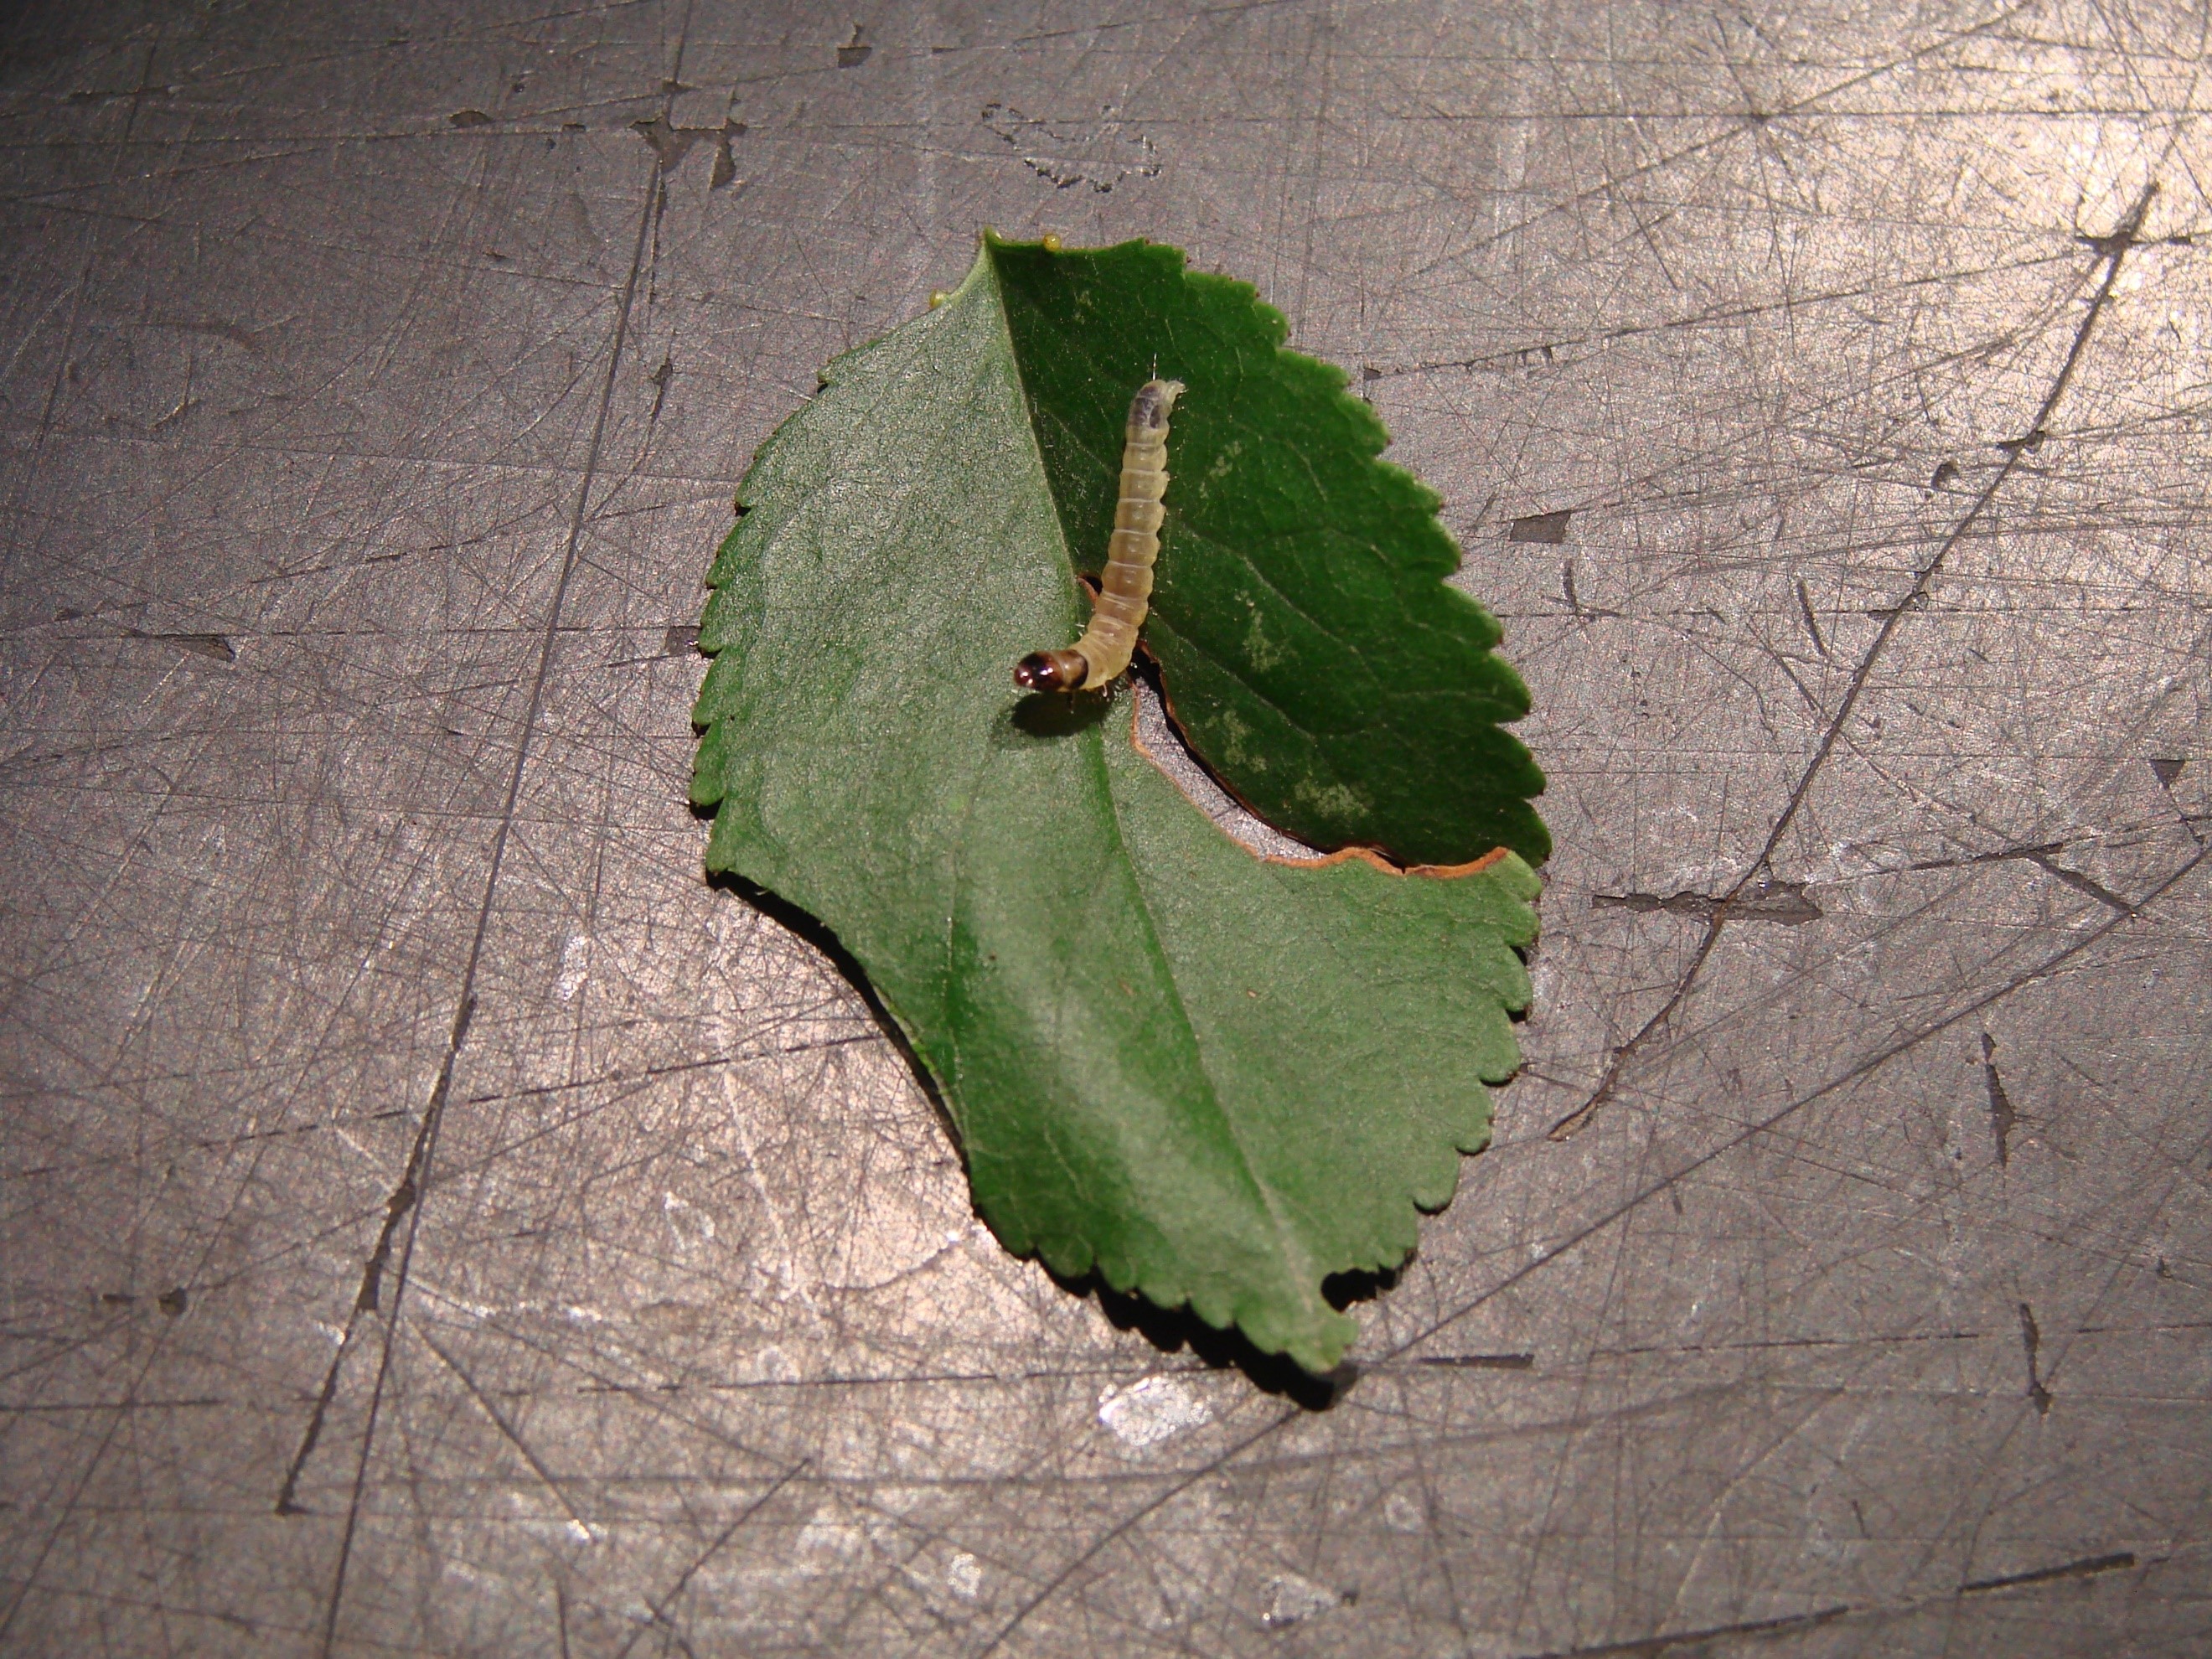 Obliquebanded leafroller caterpillar